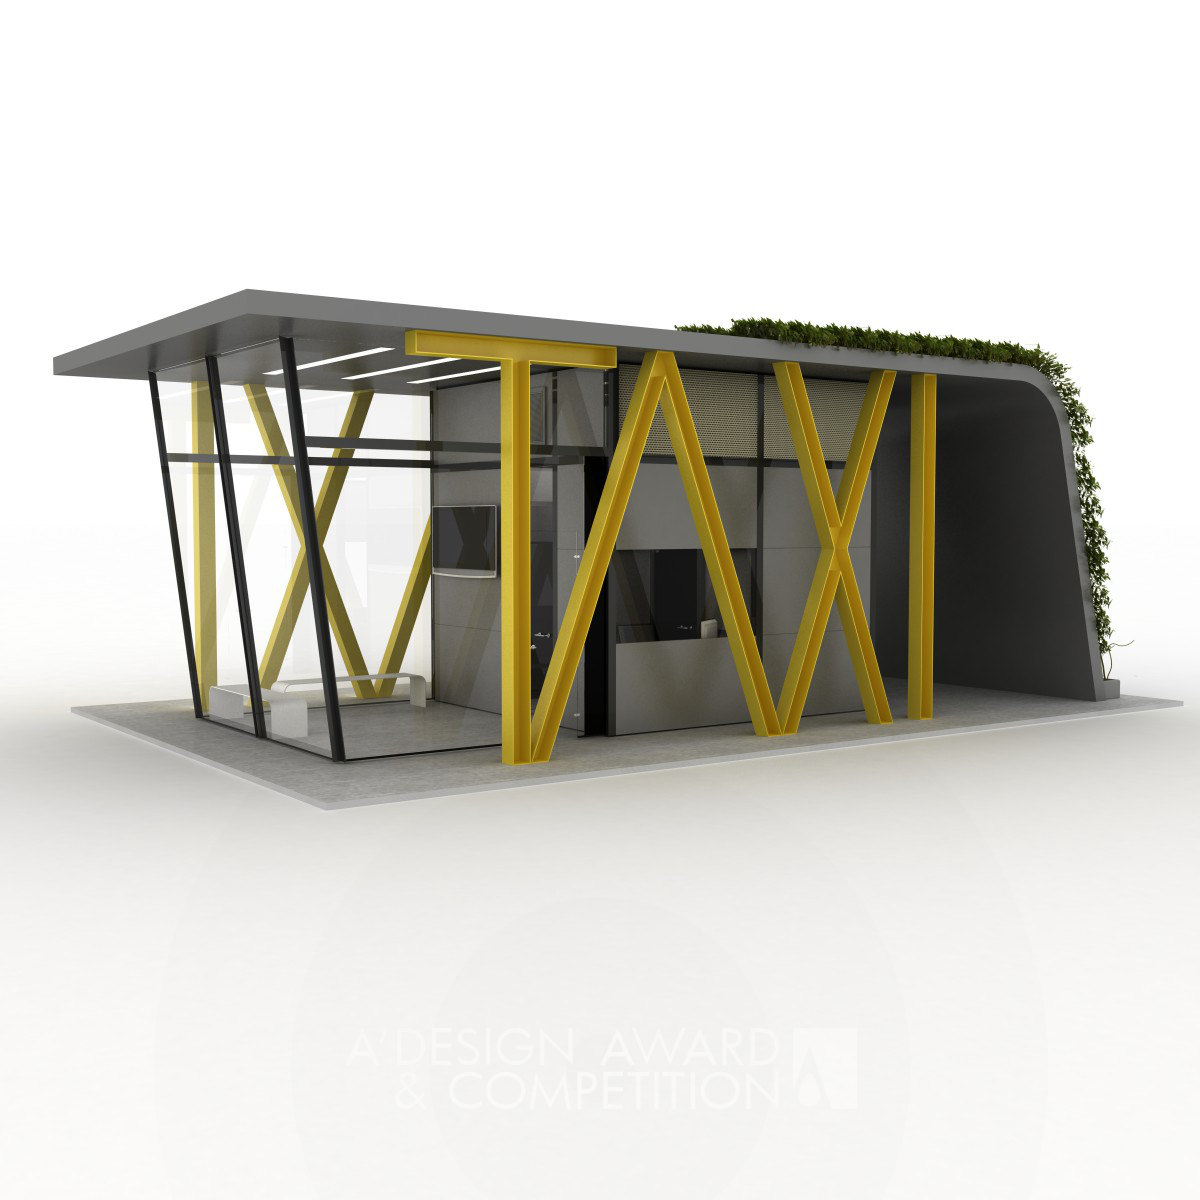 TAXI Taxi Station by Hakan Gürsu